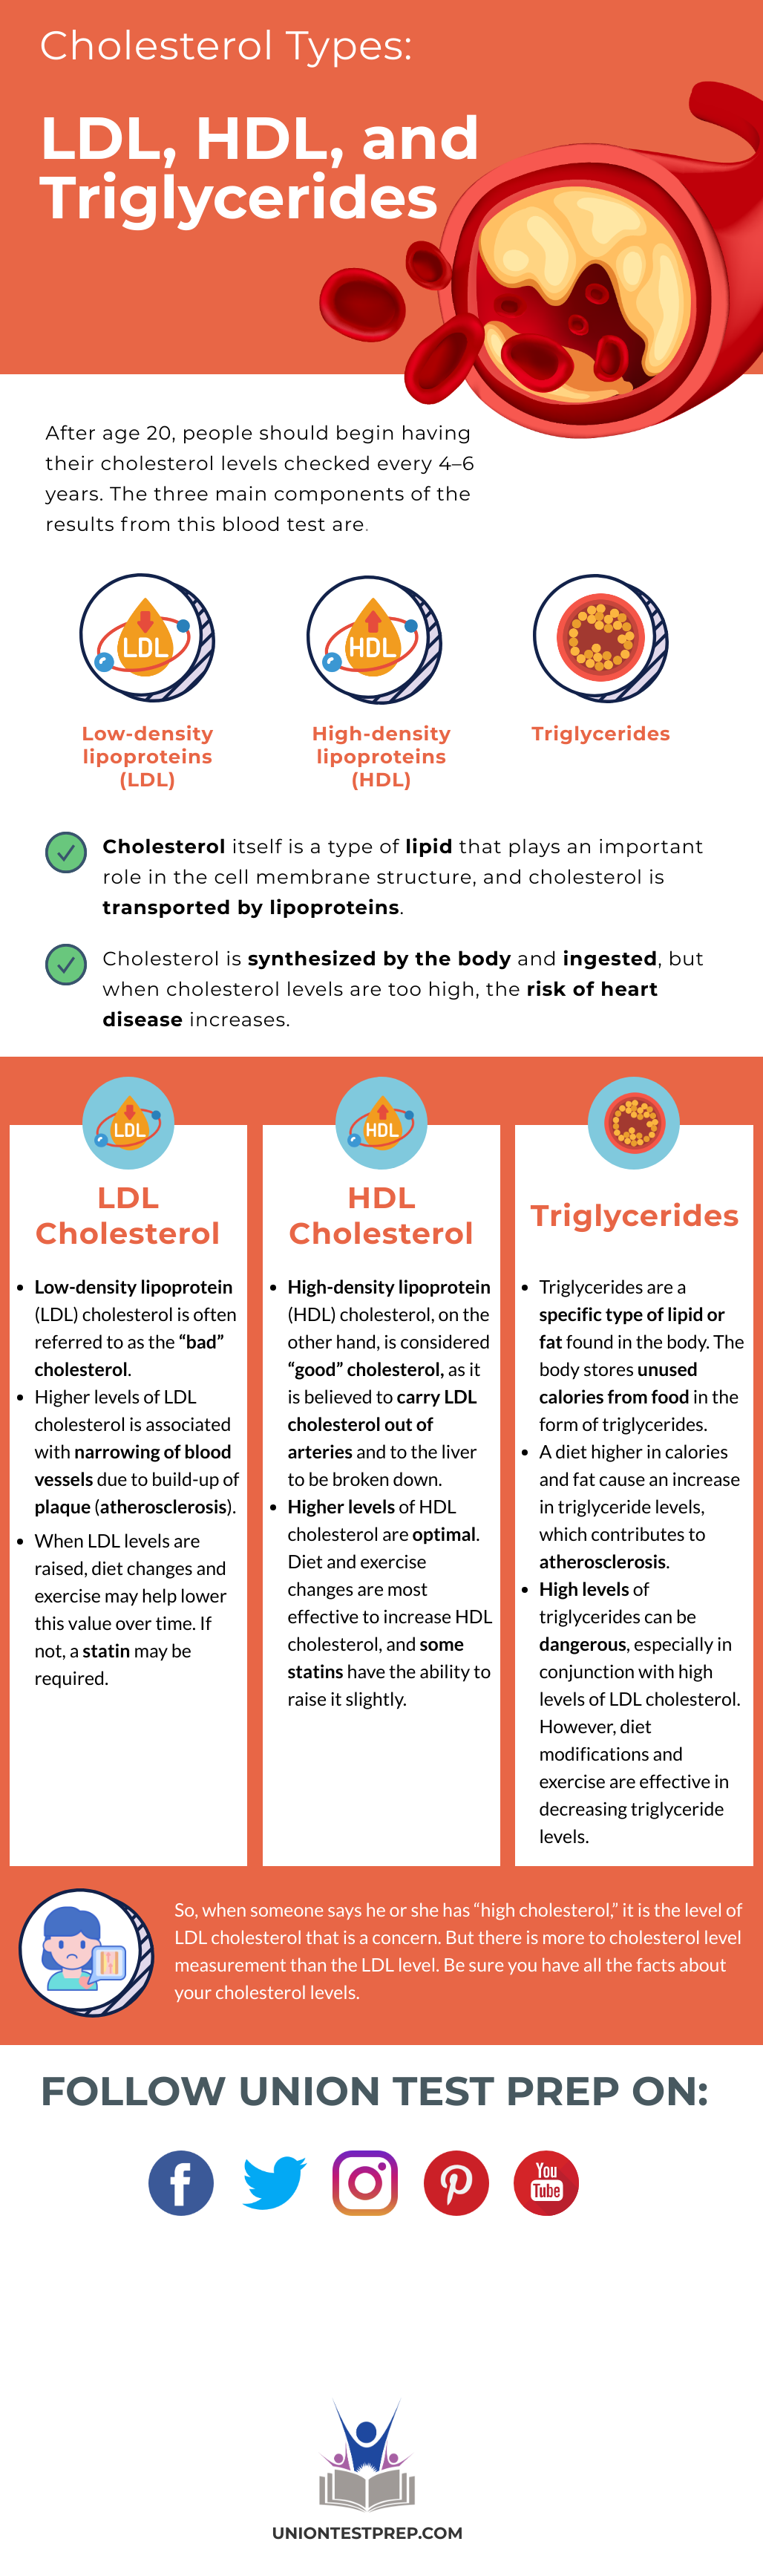 Cholesterol Types